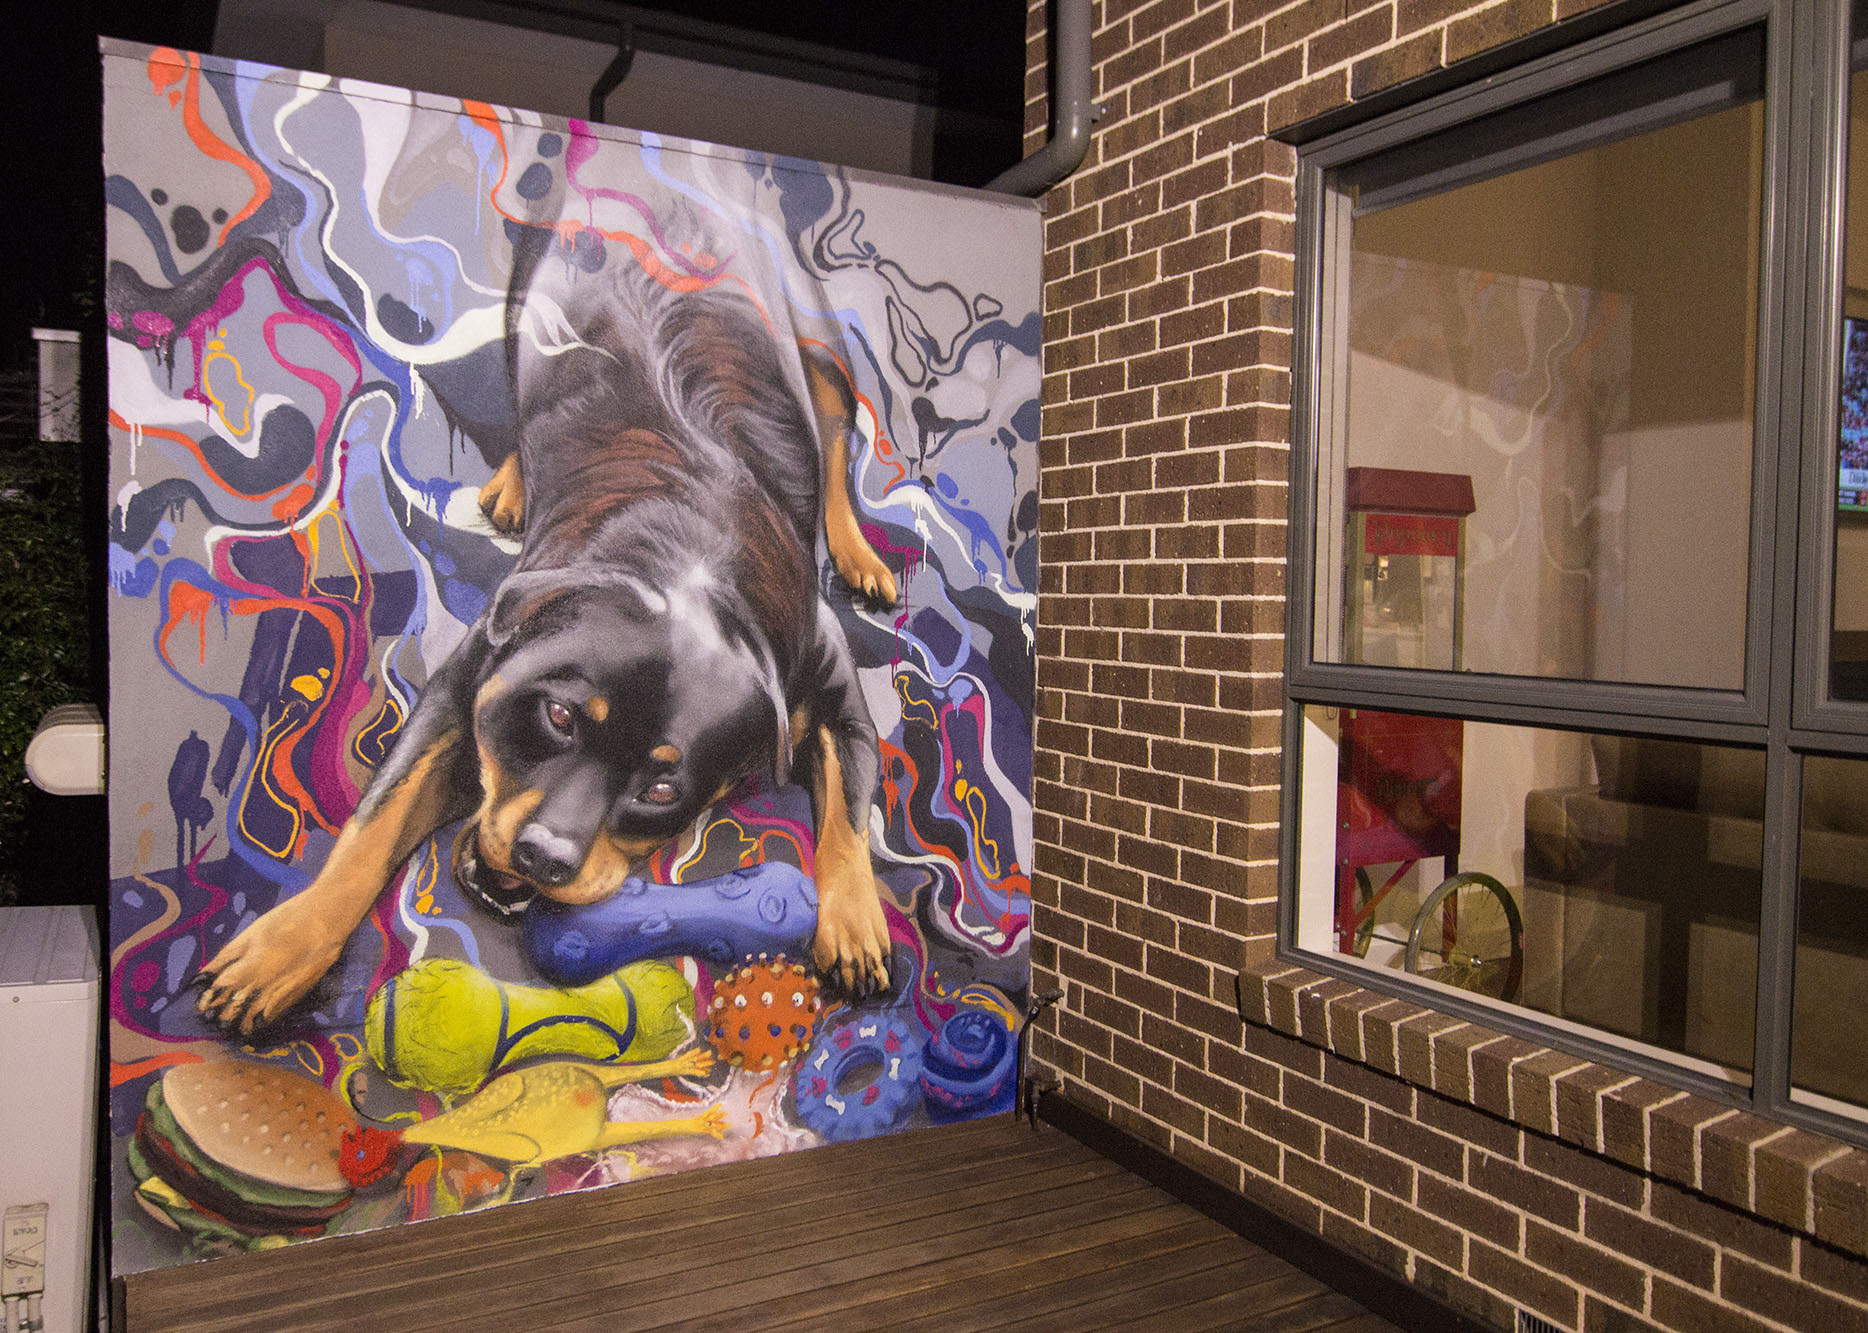 Graffiti mural of a dog